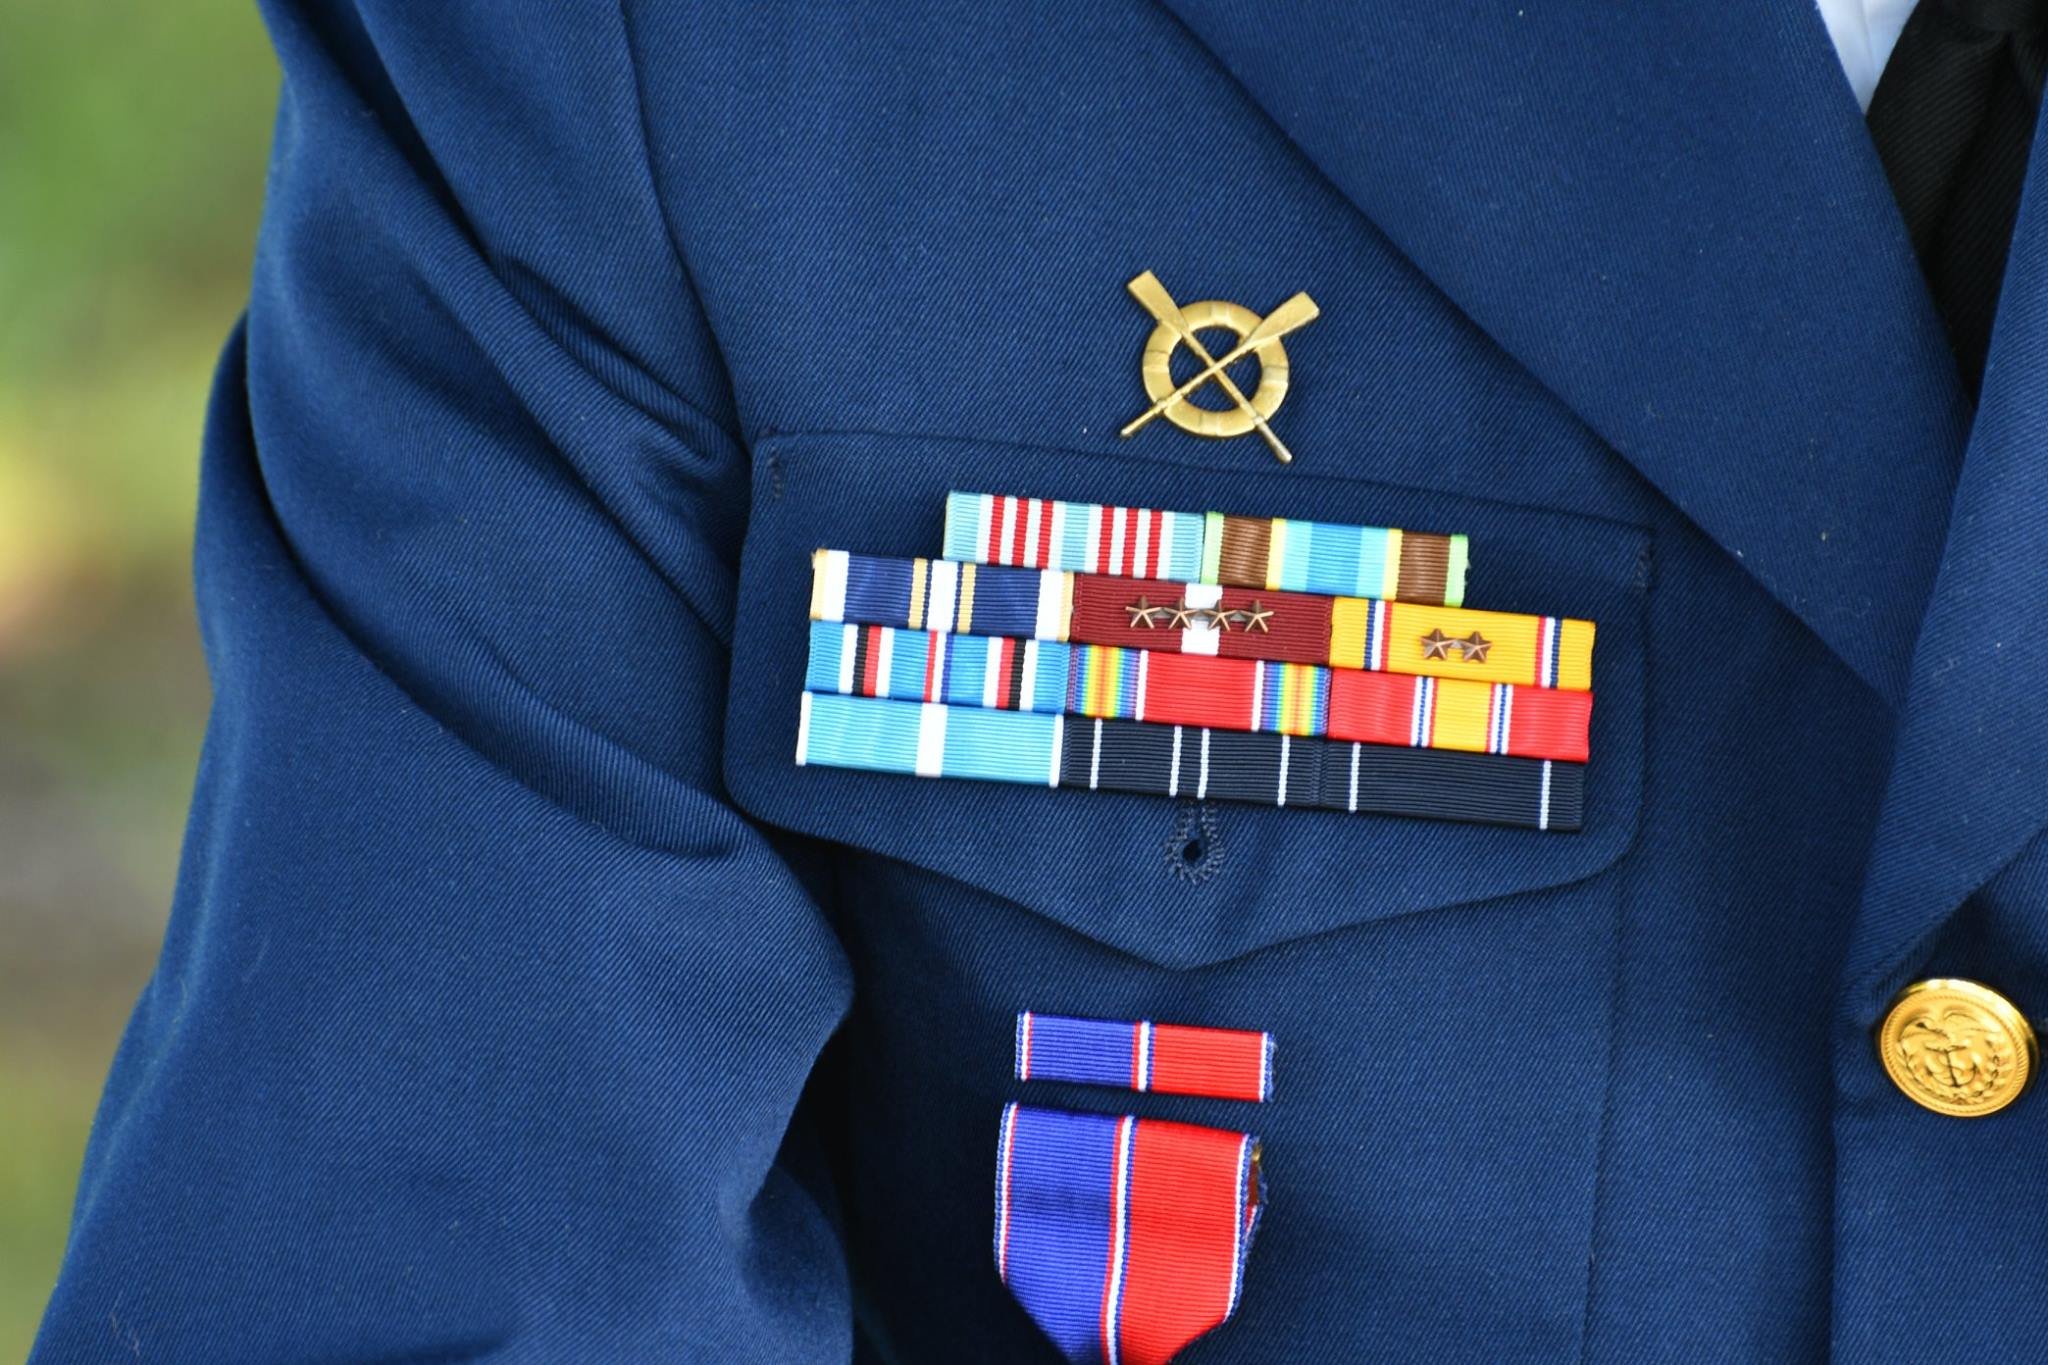 Ira's medals up close